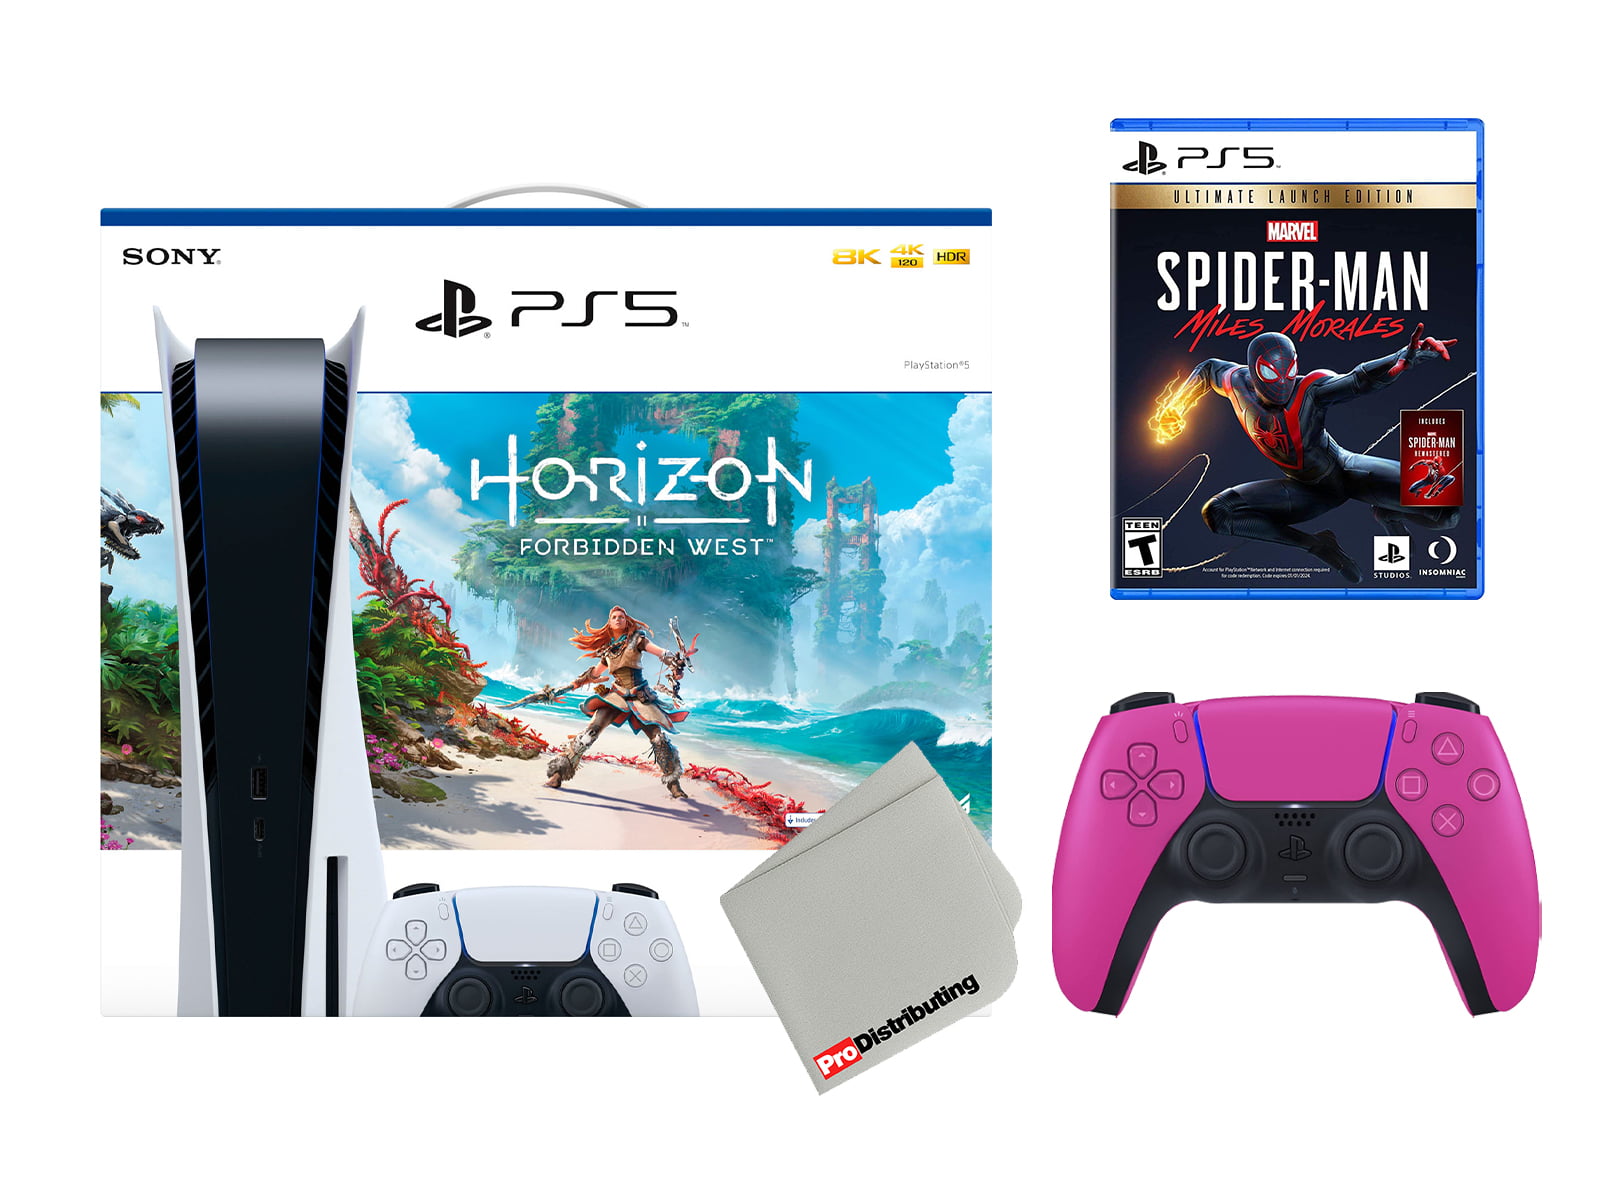 Horizon Forbidden West Bonus Content DLC PS4 PS5 PlayStation 4 5 - NOT FULL  GAME